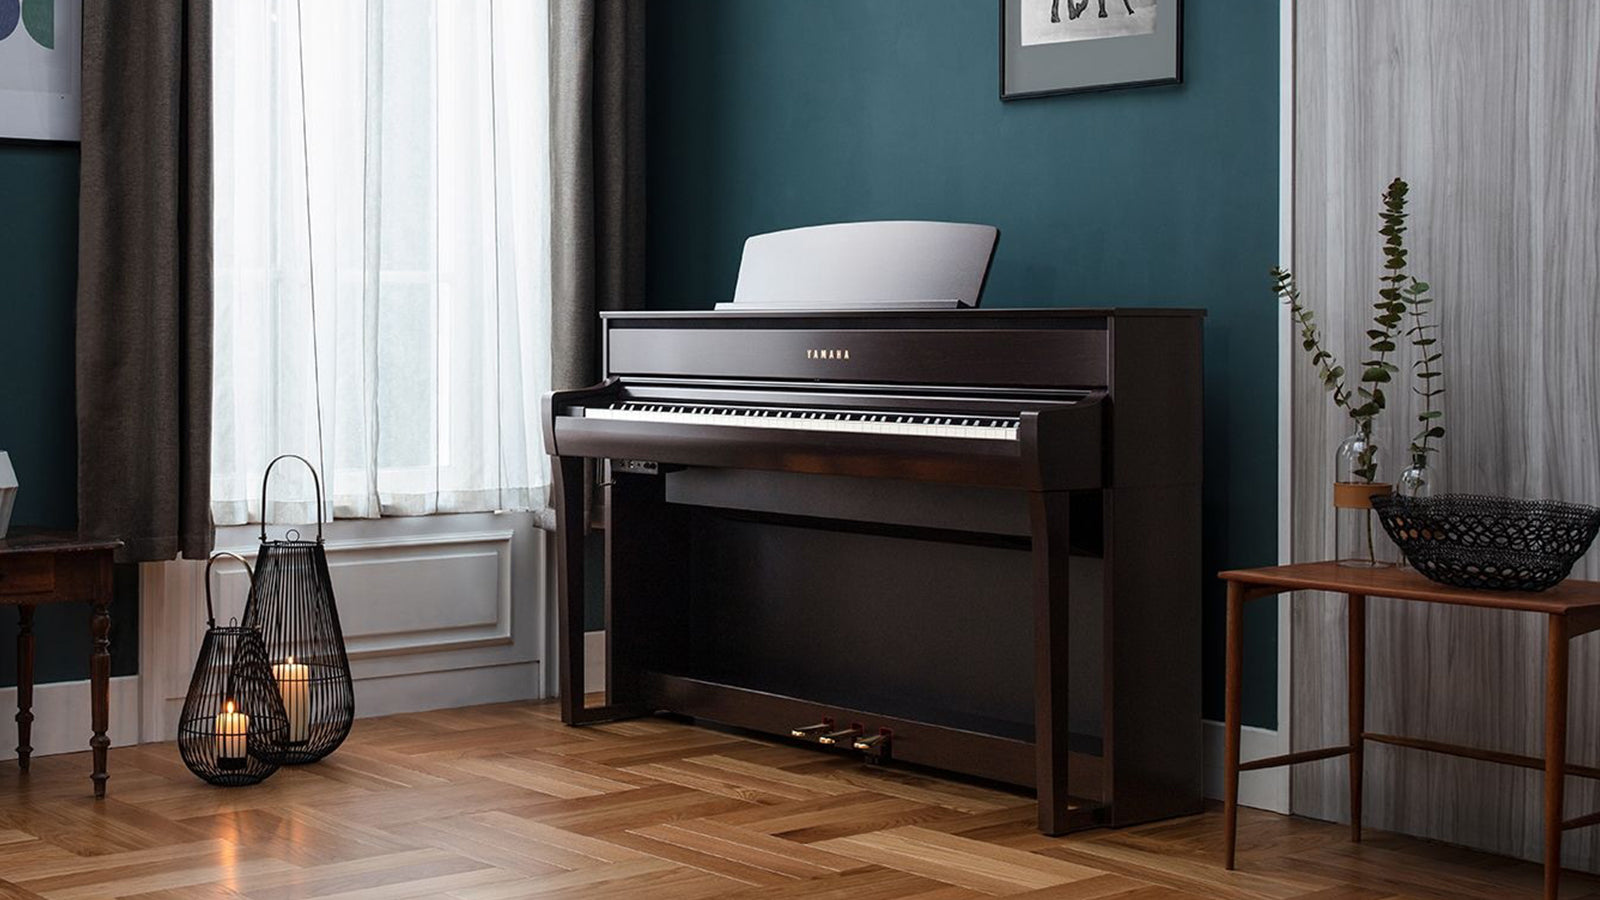 A Yamaha upright piano in a stylish room